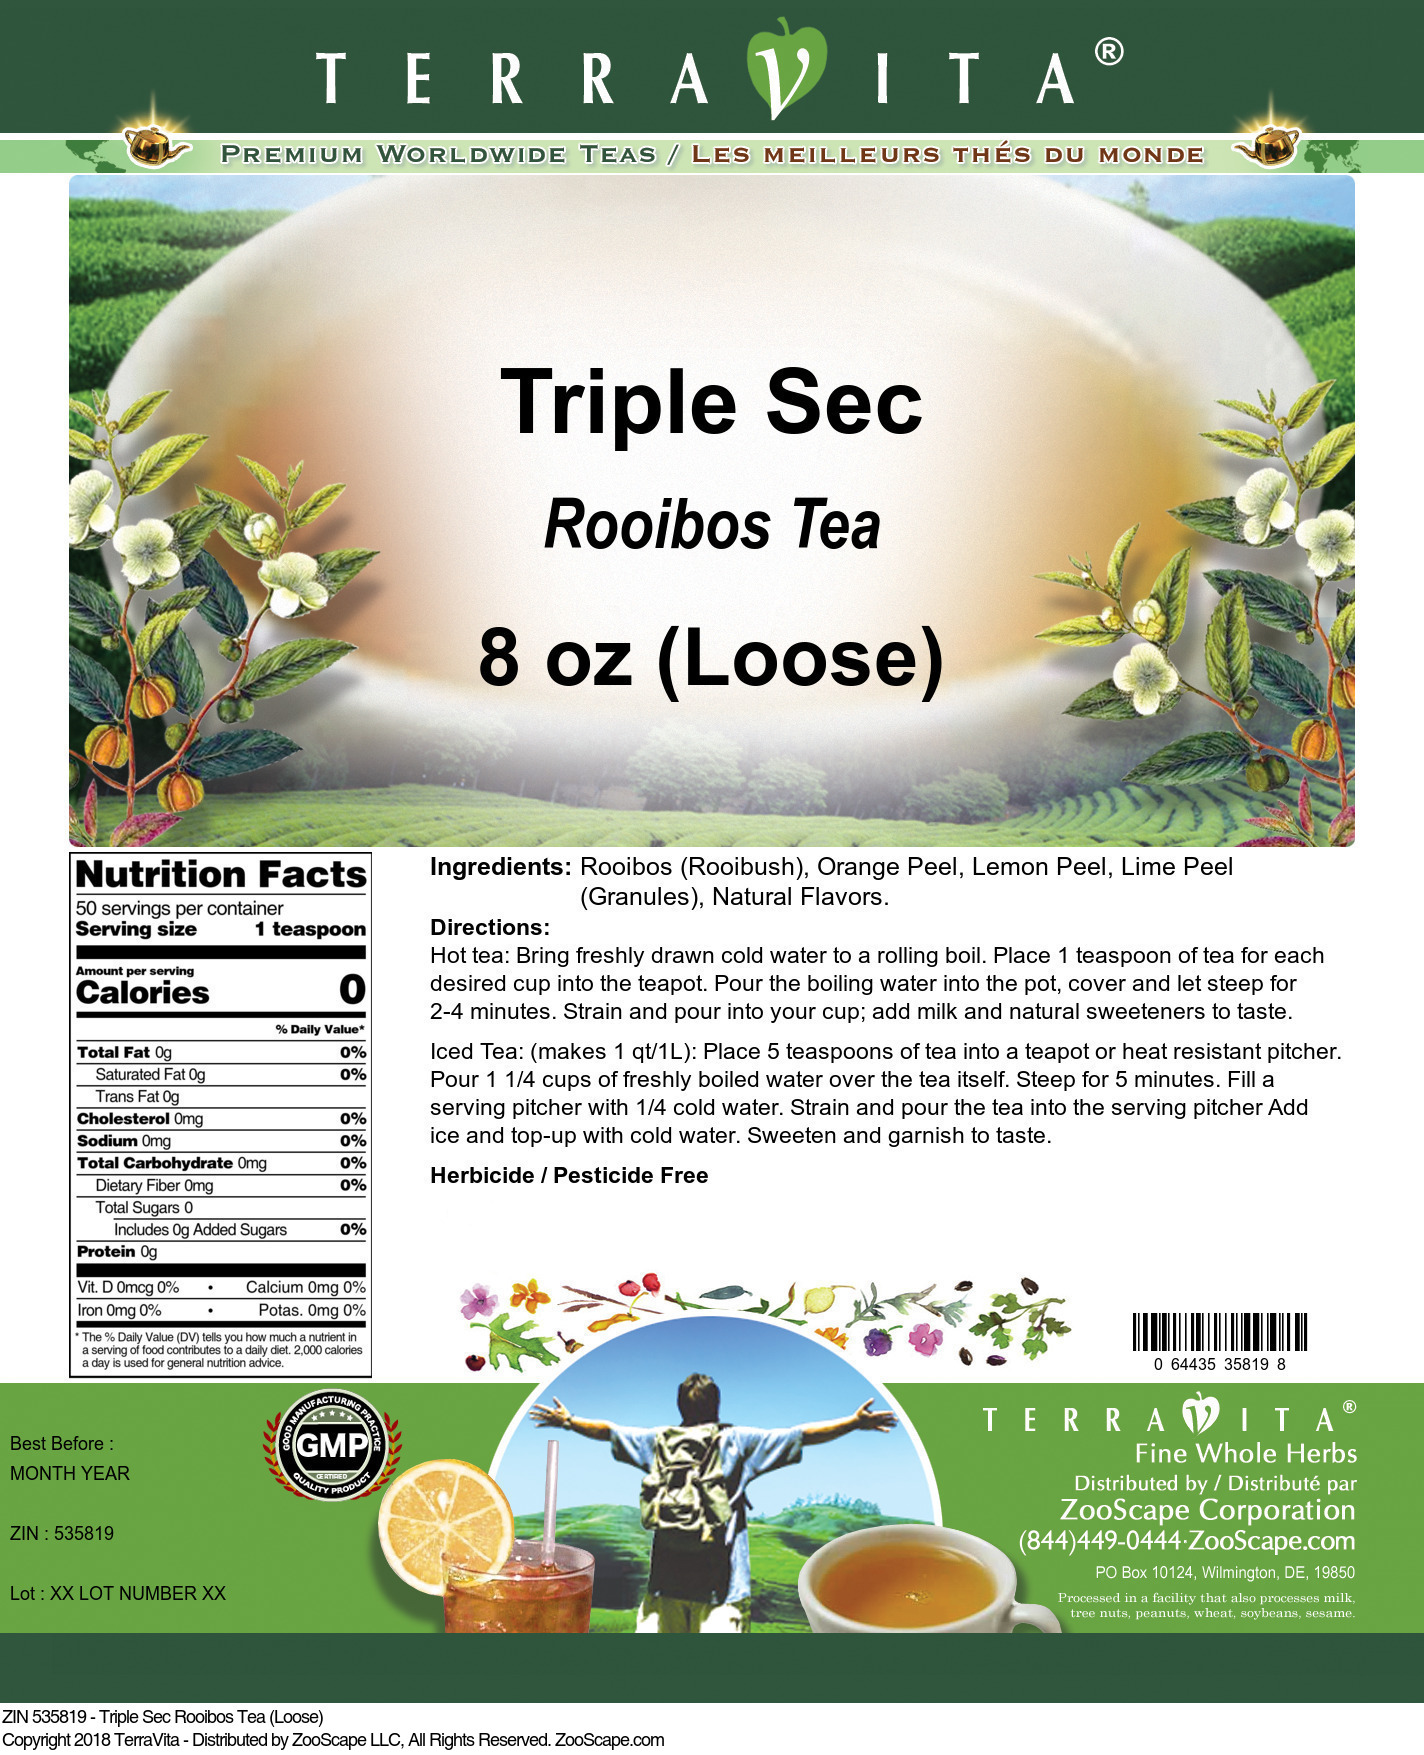 Triple Sec Rooibos Tea (Loose) - Label